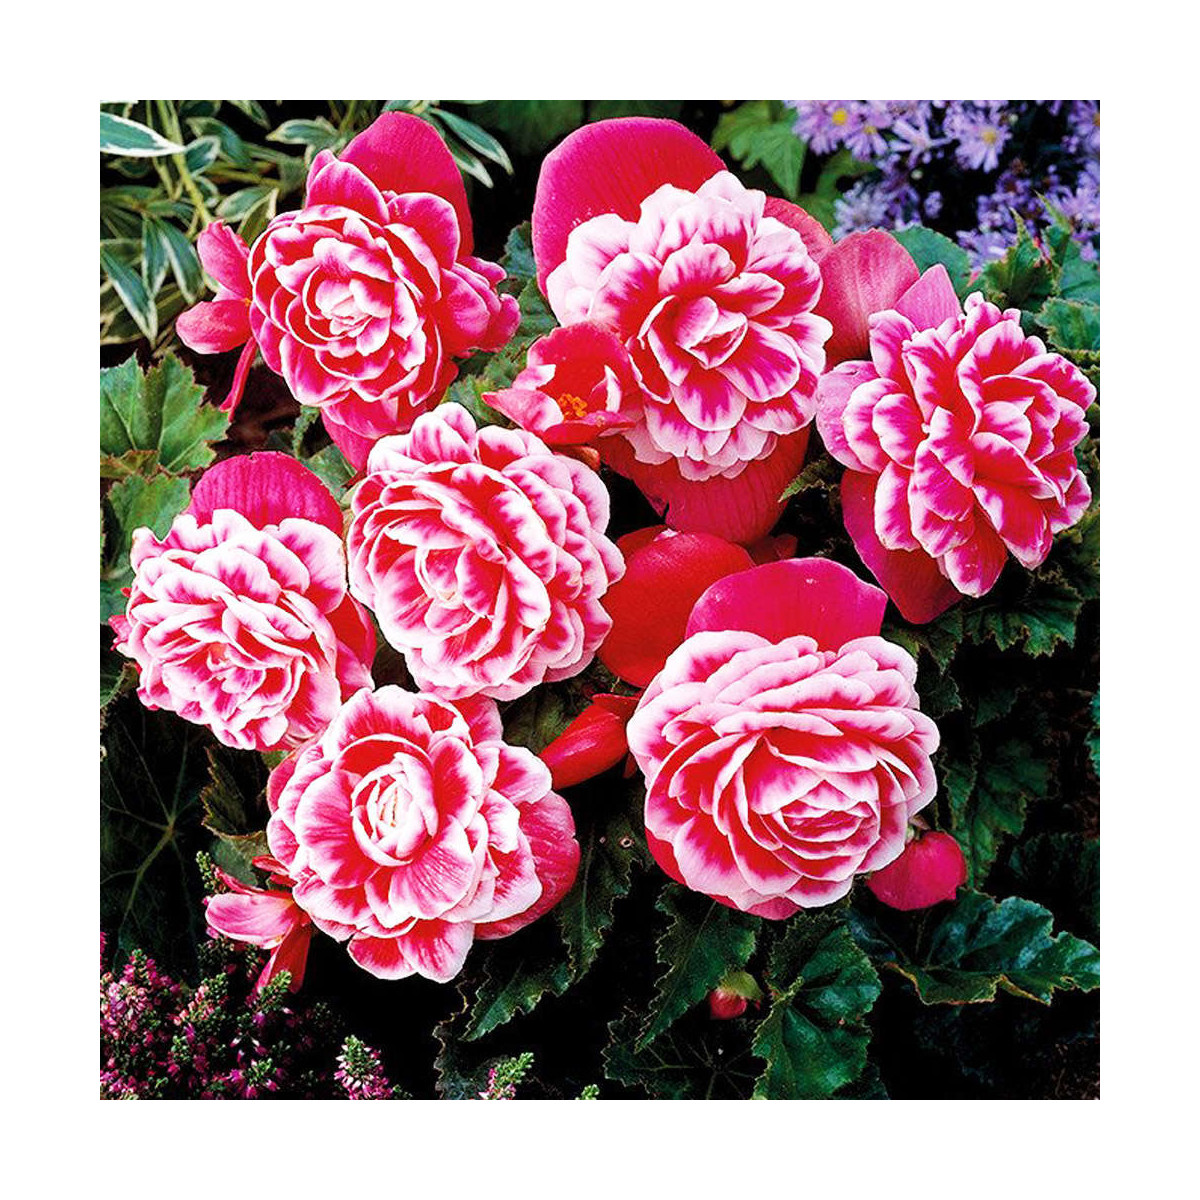 Begonie Camellia - Begonia - hlízy begonie - 2 ks